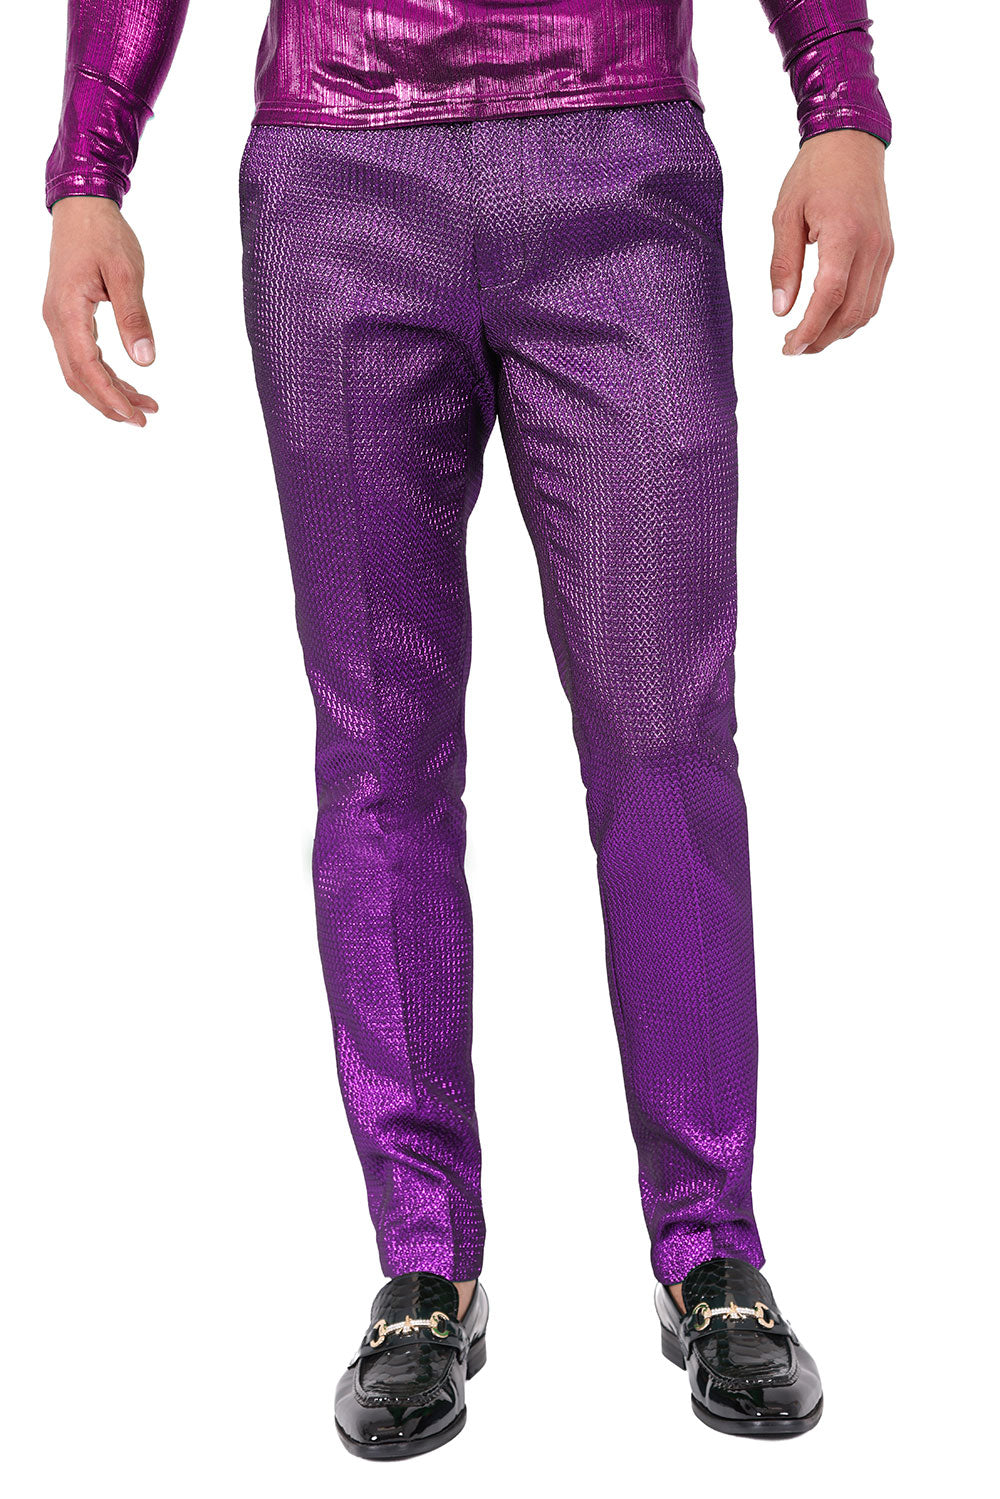 Barabas Men's Solid Vibrant Color Luxury Chino Pants 2cp3105 Purple